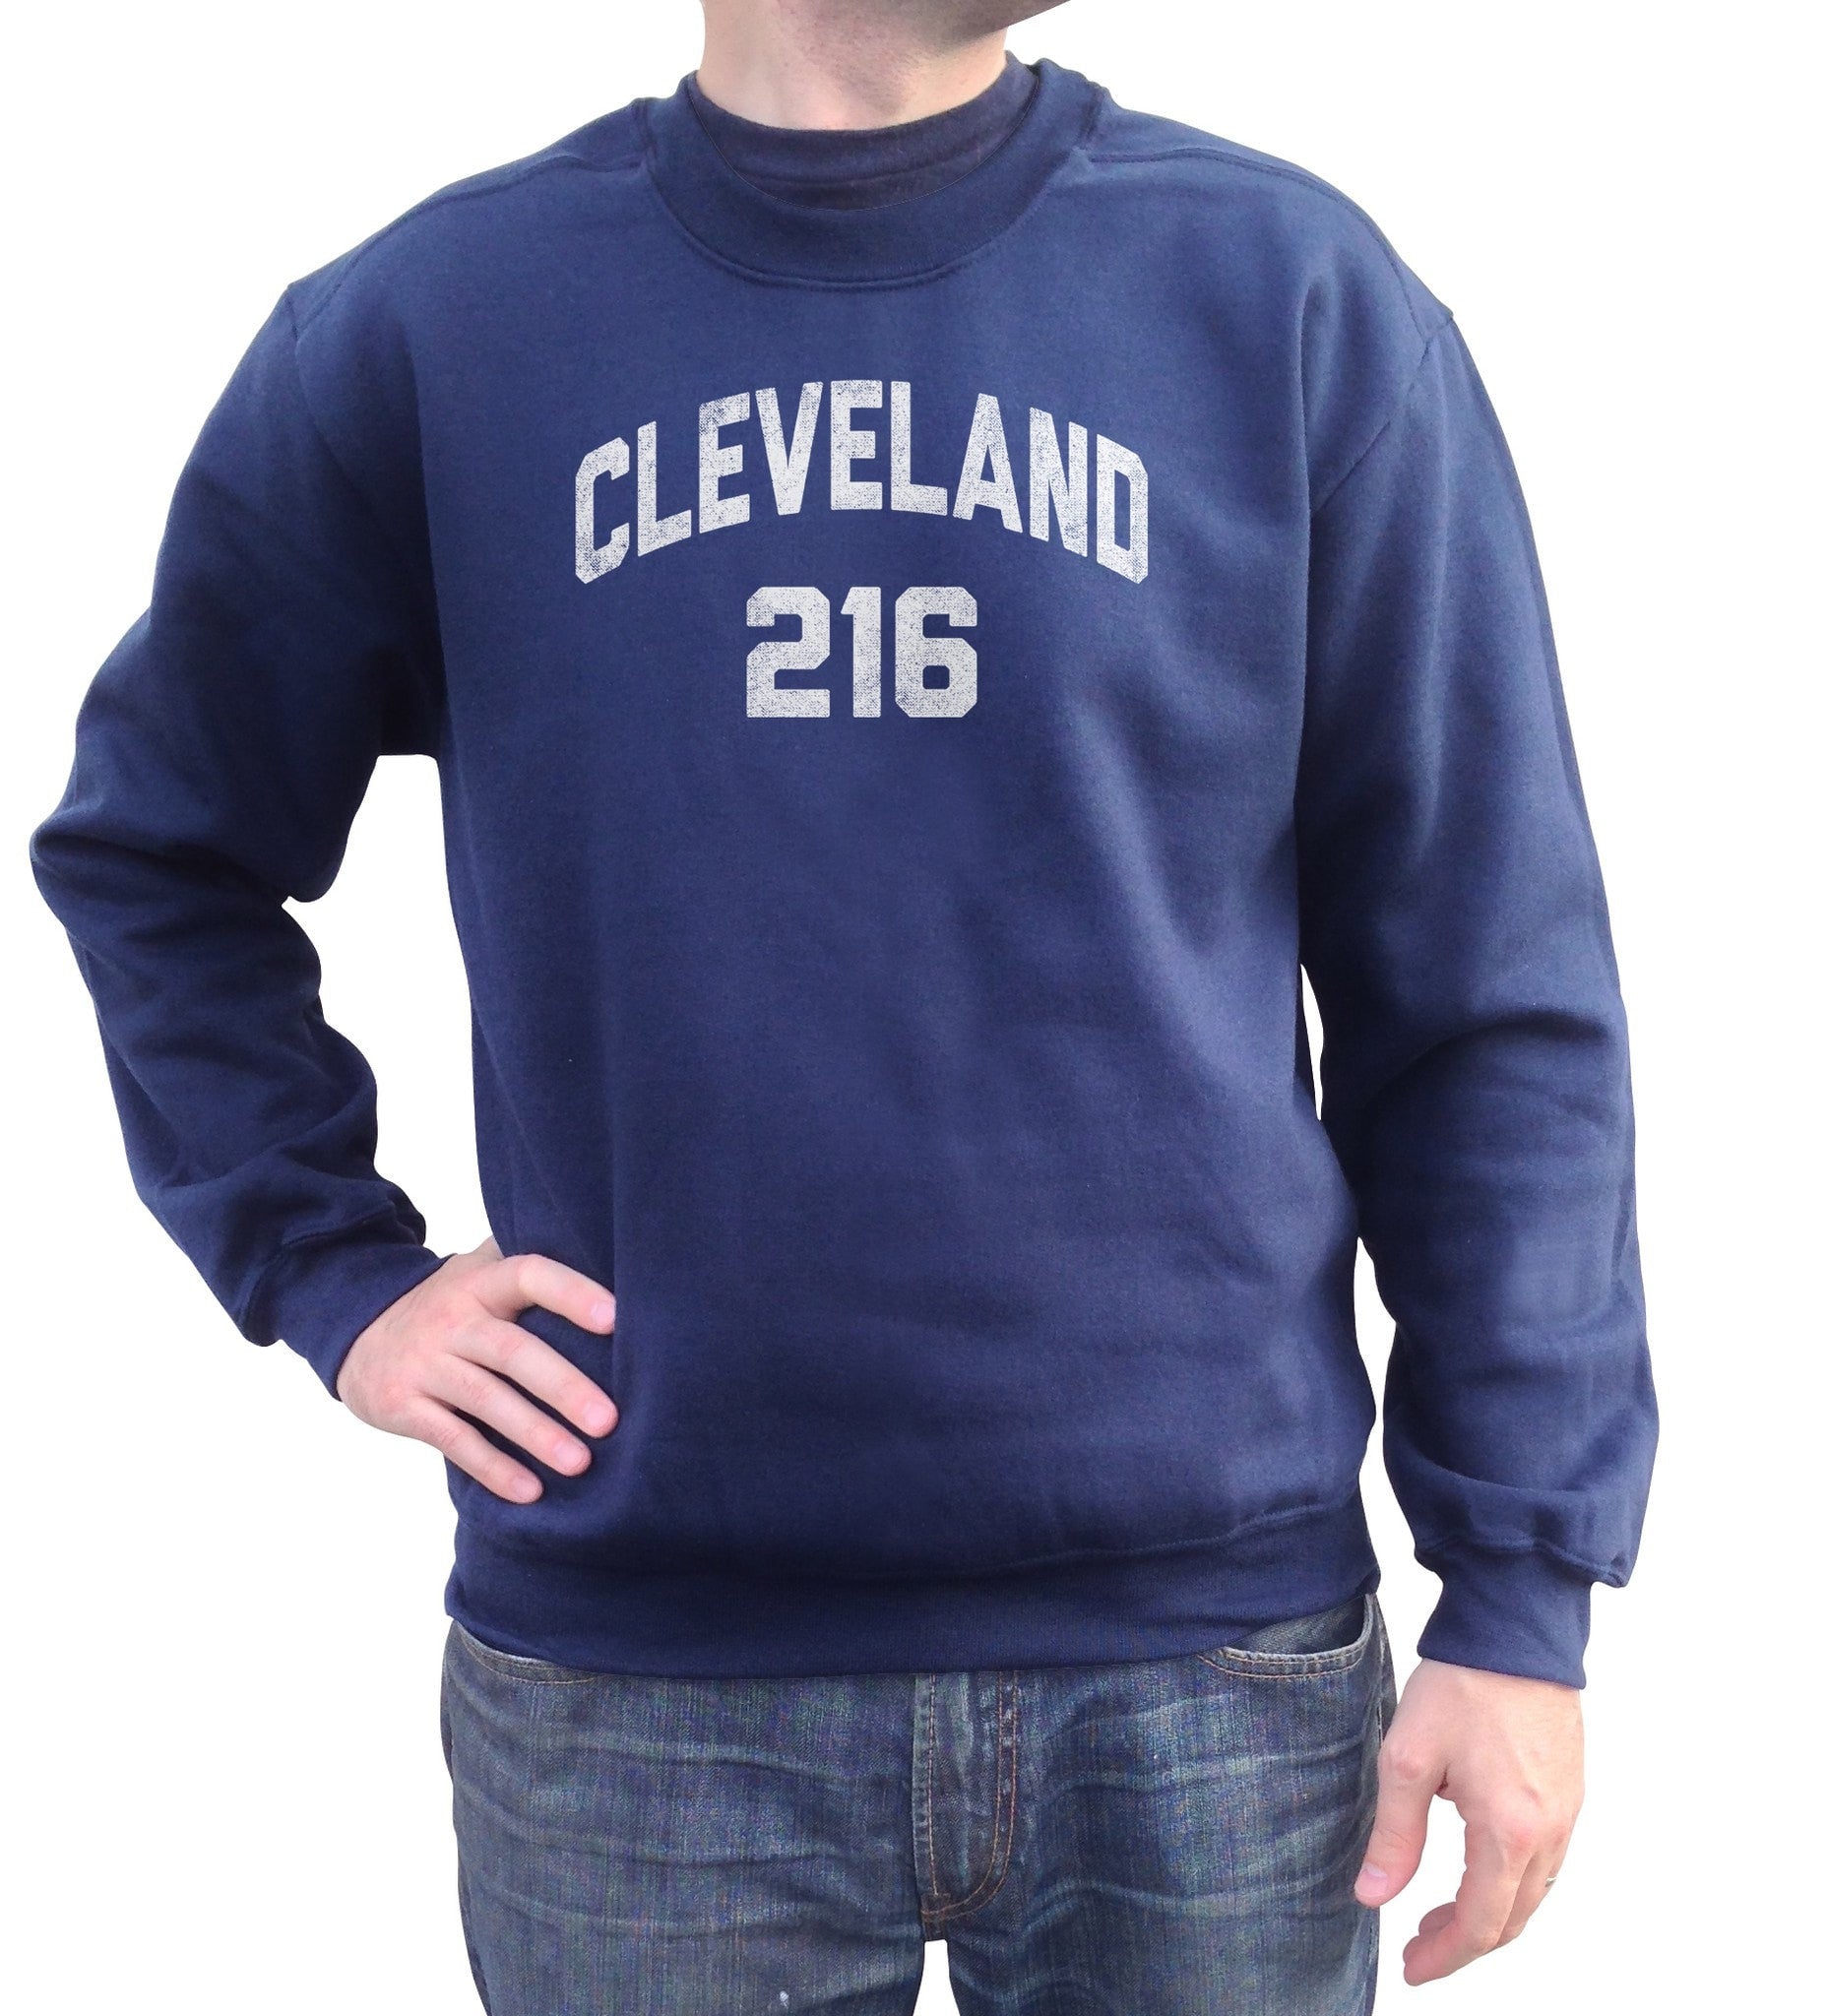 Unisex Cleveland 216 Area Code Sweatshirt